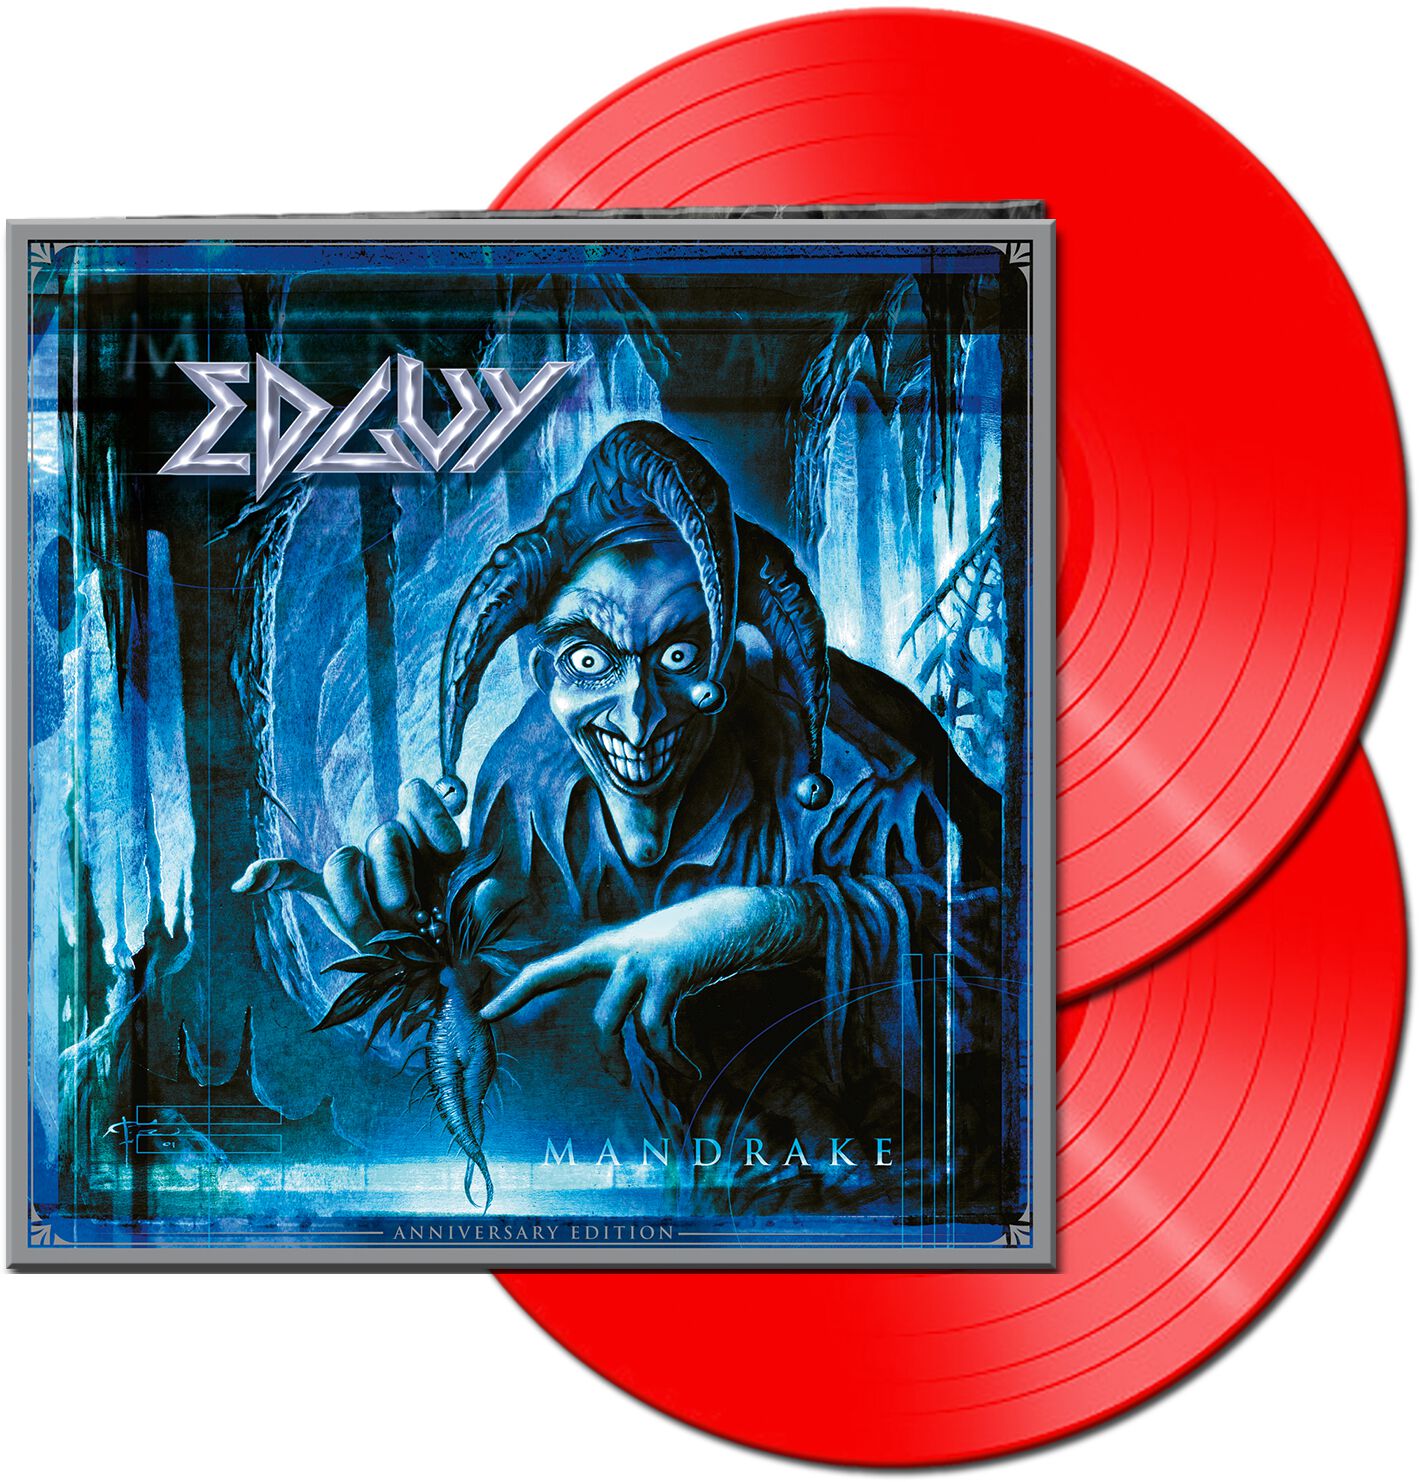 Edguy Mandrake - Anniversary Edition LP red